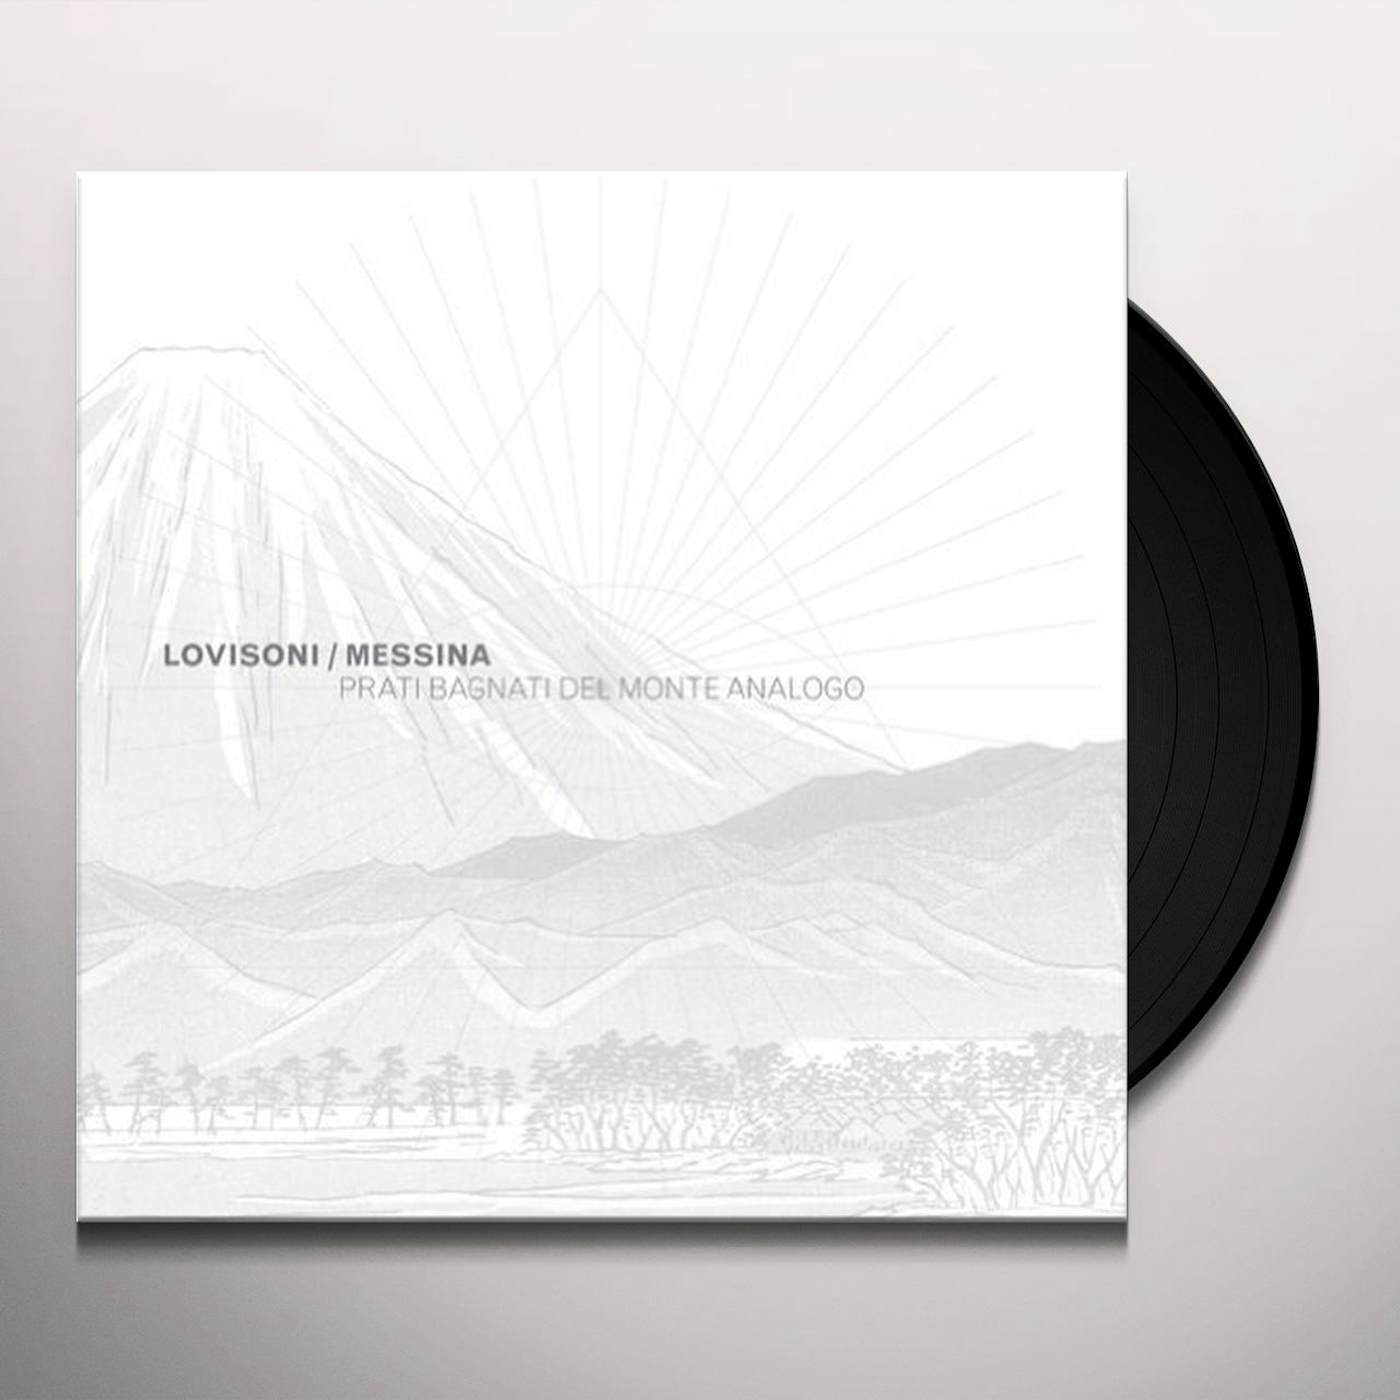 Raul Lovisoni / Francesco Messina Prati Bagnati Del Monte Analogo Vinyl Record